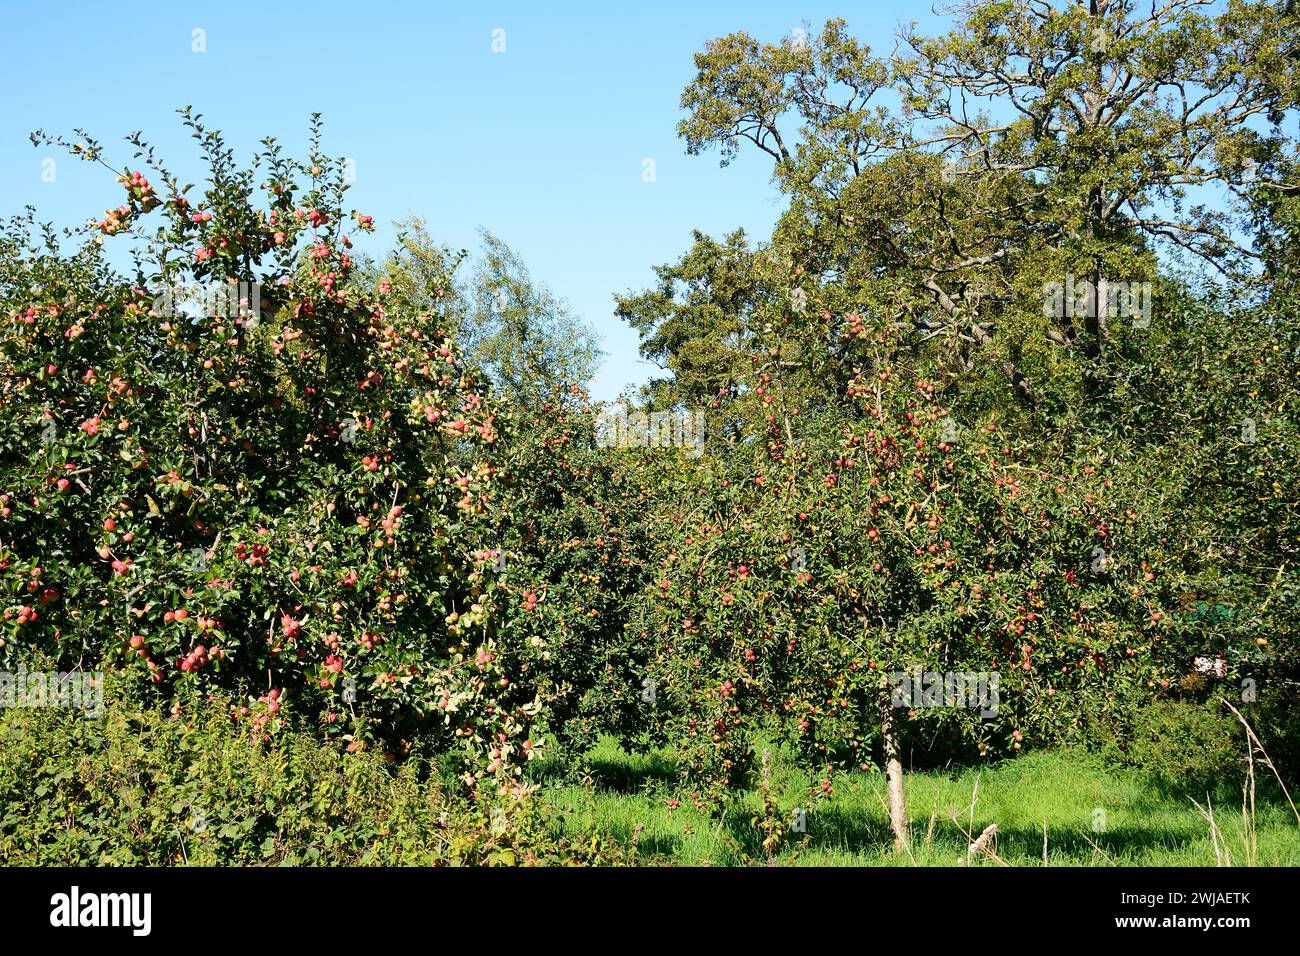 Apple trees in an orchard on the edge of town, Donyatt, Somerset, UK, Europe. Stock Photo